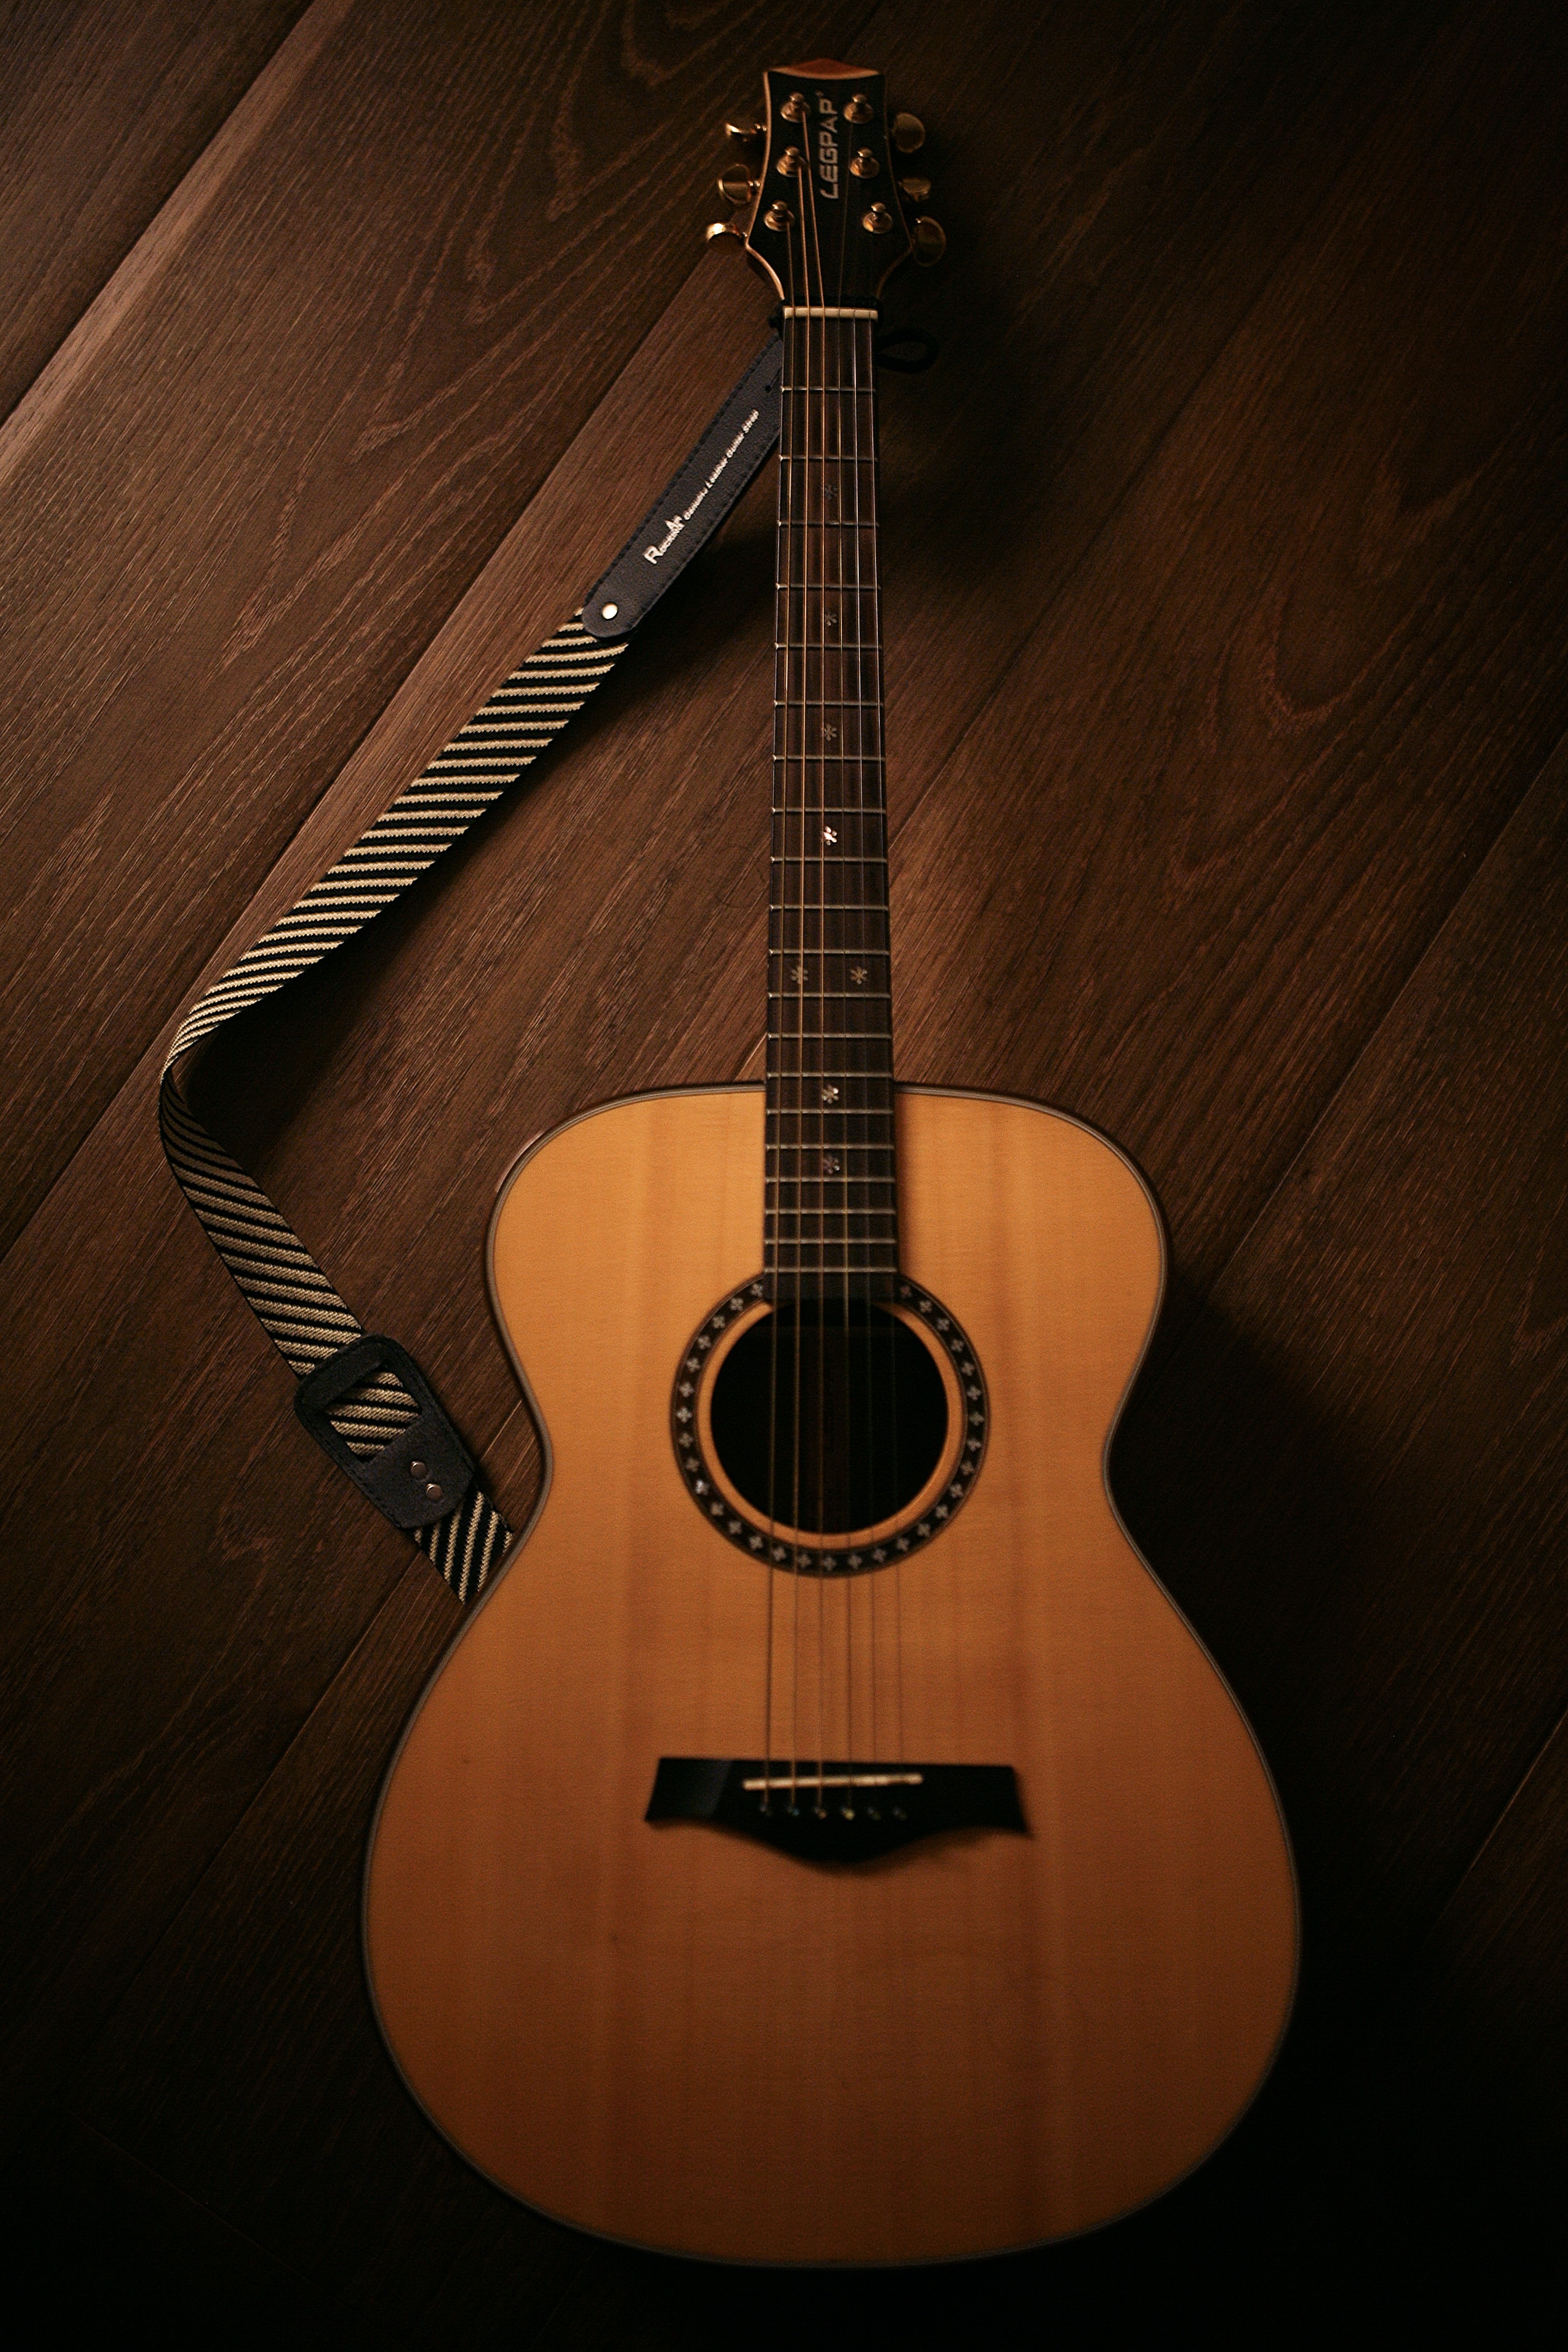 guitar, acoustic guitar, musical instrument, music, brown cellphone